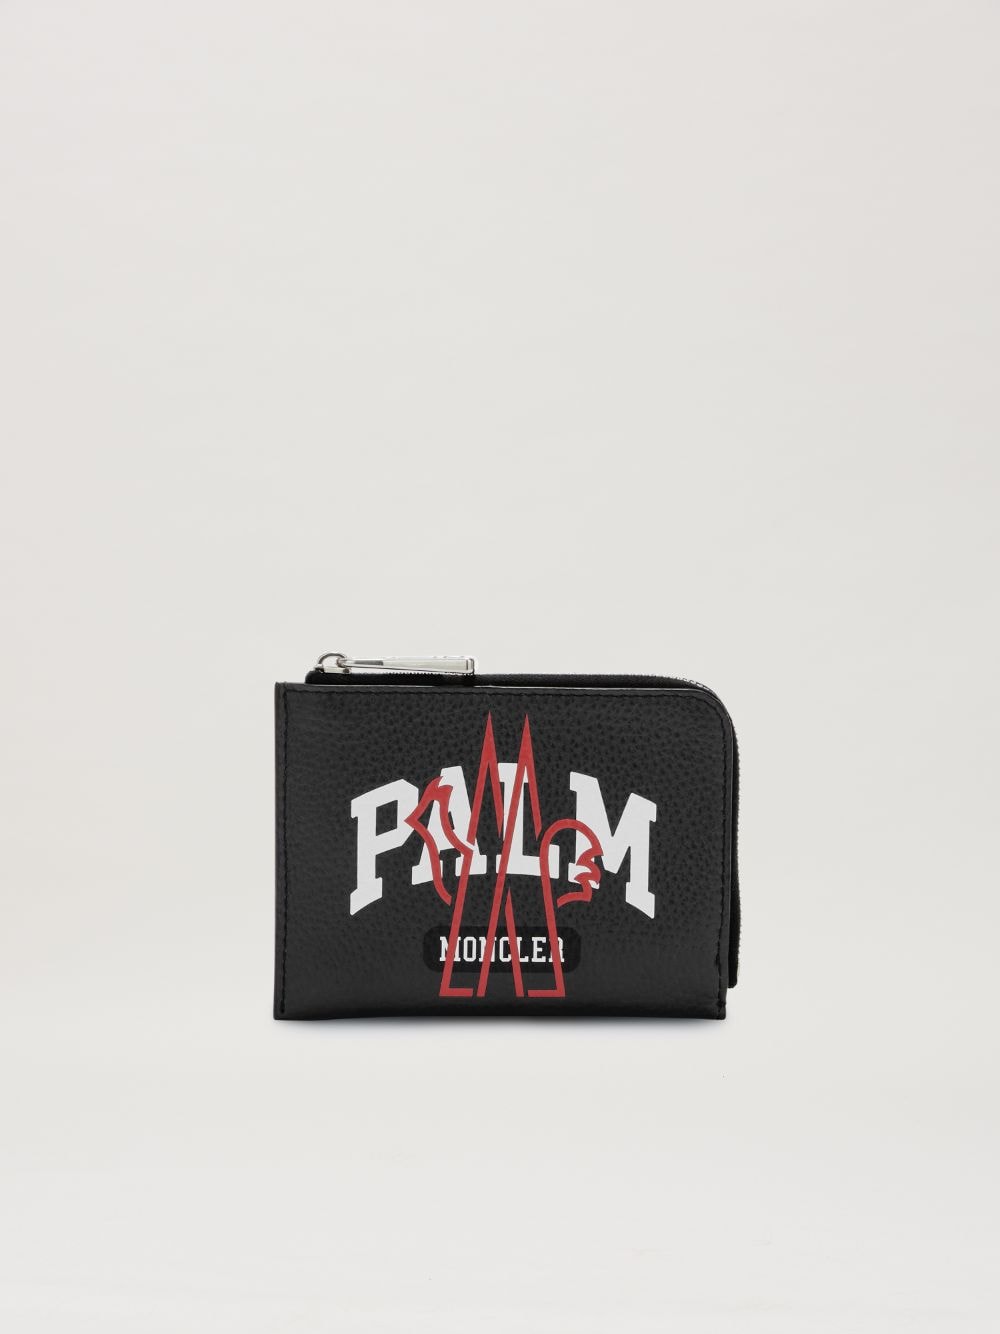 Moncler X Palm Angels Genius Portacarte - Sito ufficiale di Palm Angels®